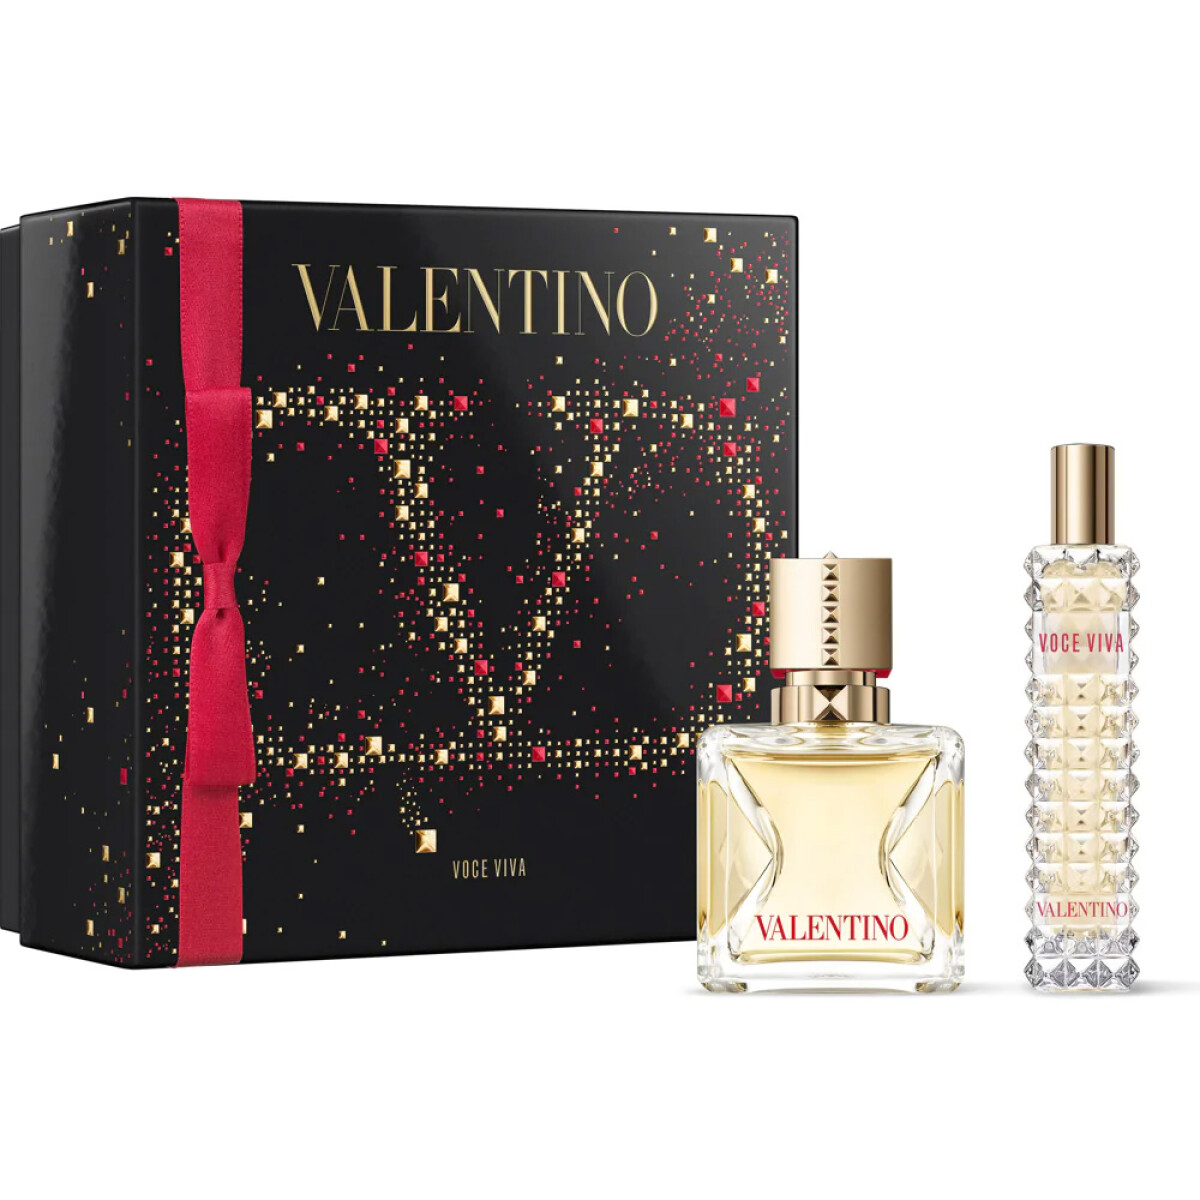 Perfume Cofre Valentino Voce Viva 50ml+ Minitalla 15ml 